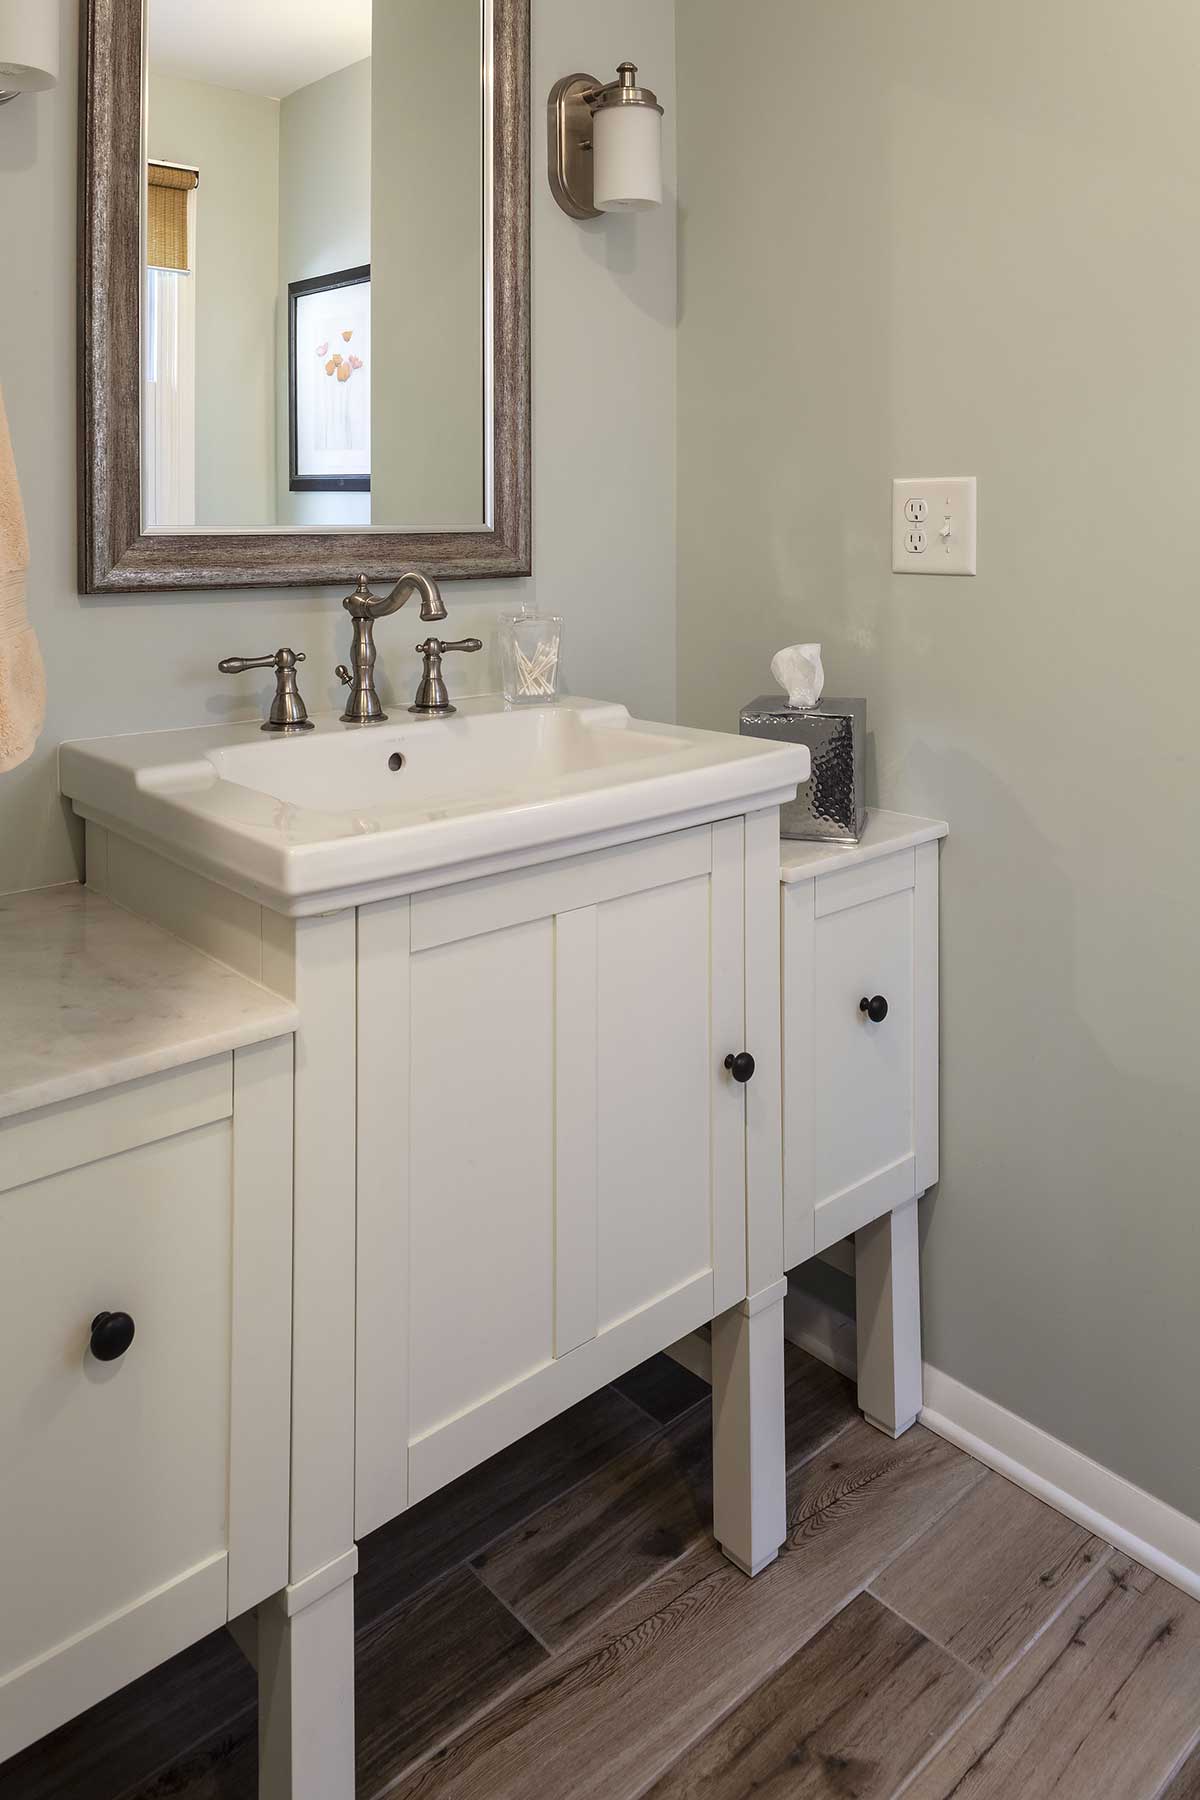 Furniture-style bathroom vanity